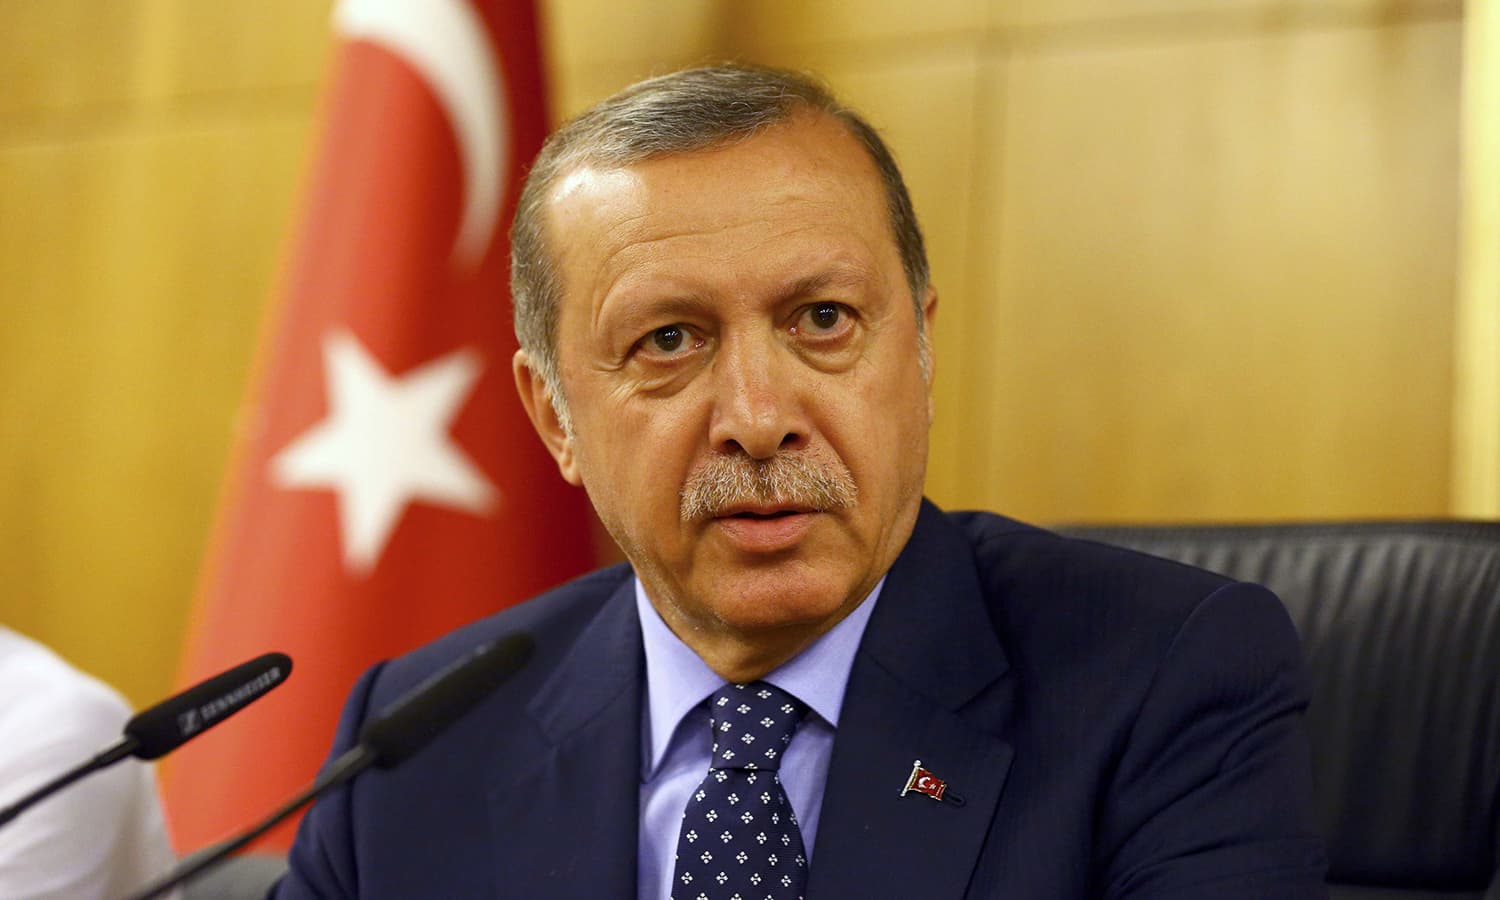 Erdogan tells UN chief Israel must be tried in international courts for Gaza crimes